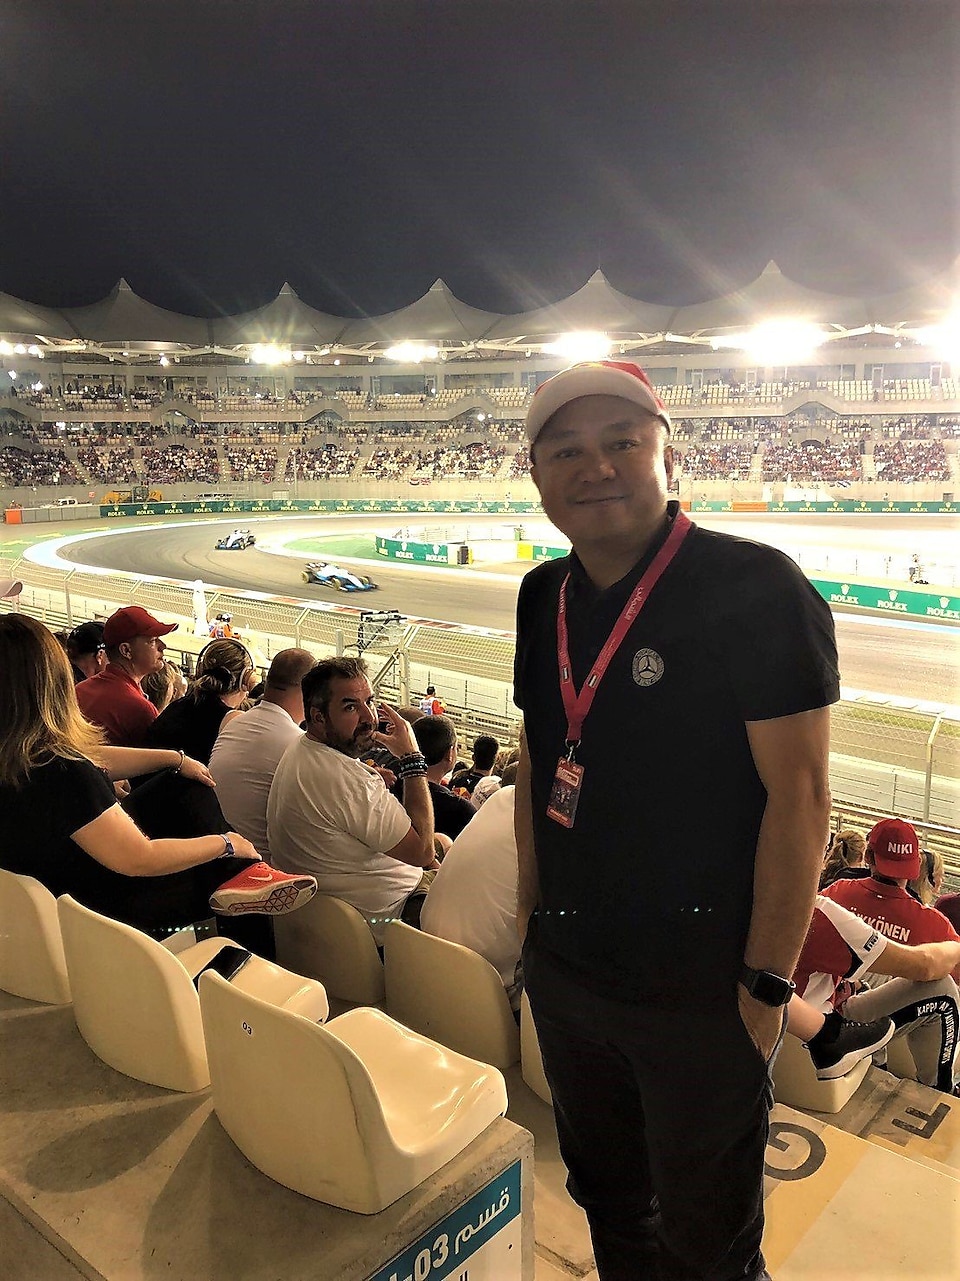 The Abu Dhabi Grand Prix 2019